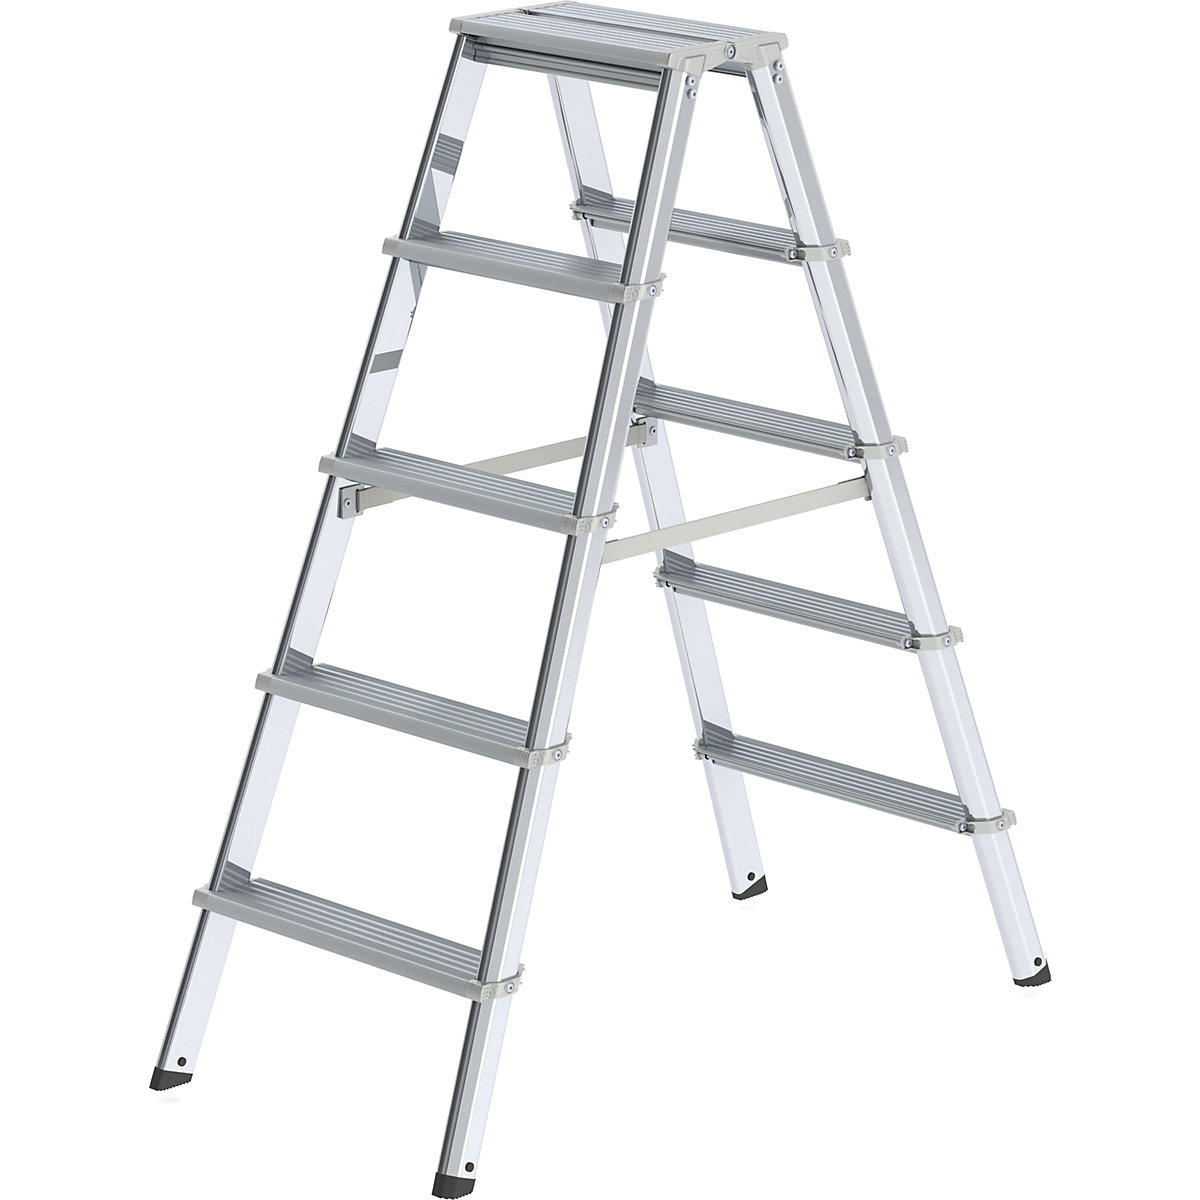 Aluminium step ladder, double sided access - MUNK